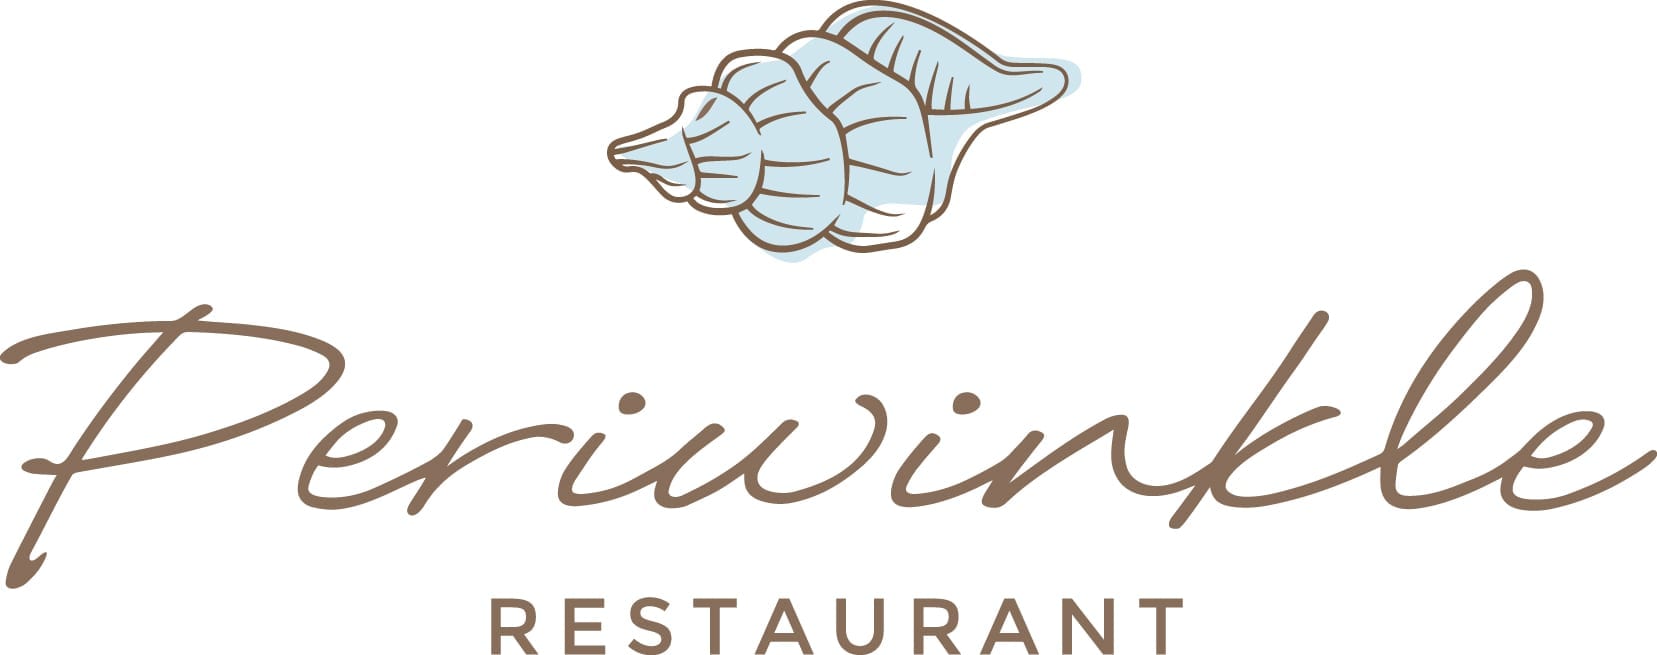 Periwinkle Restaurant Logo Eat Local Noosa 01